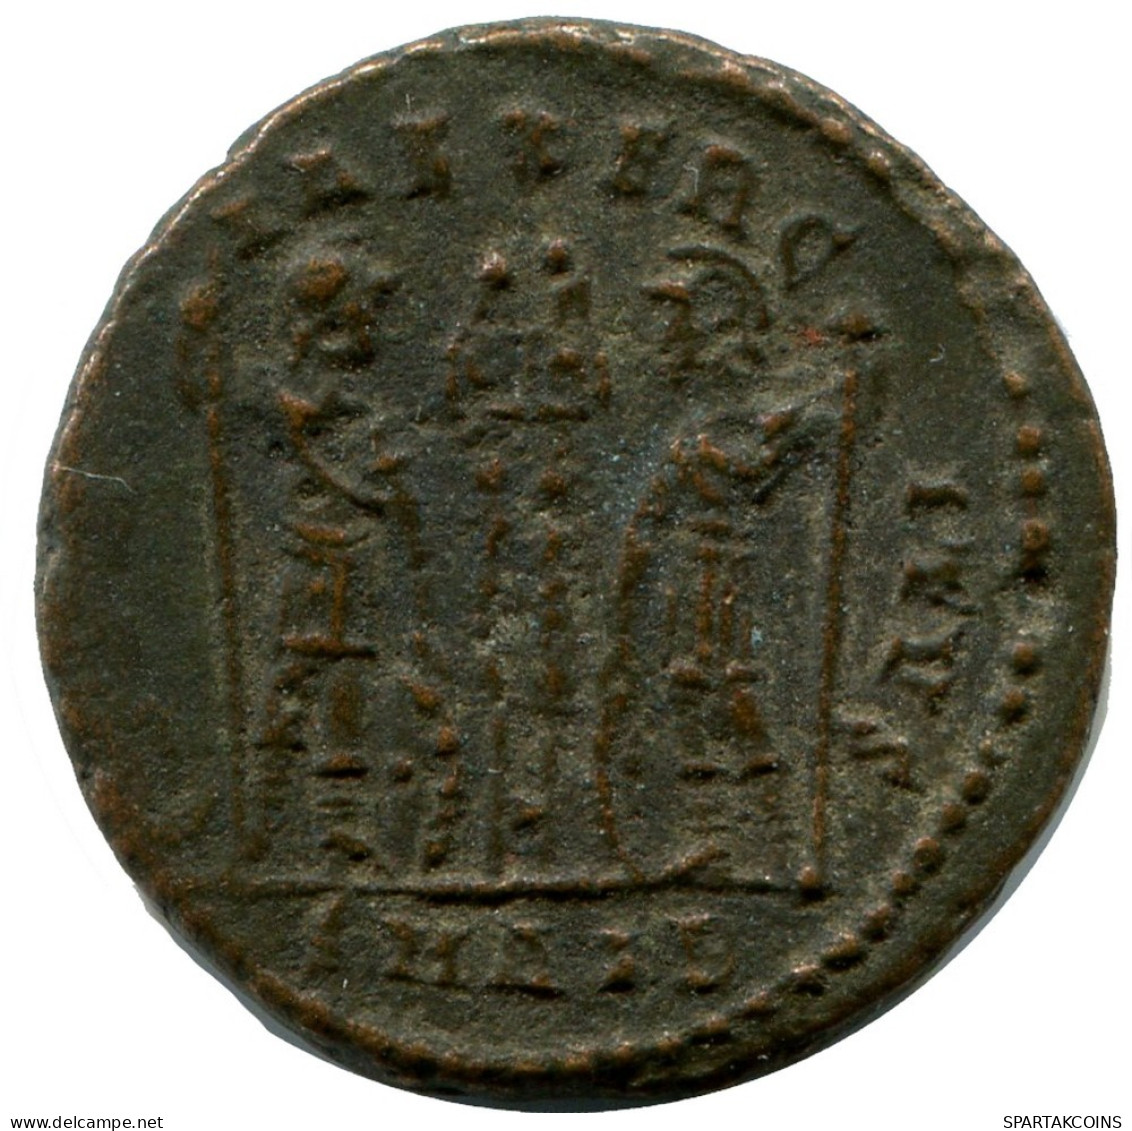 CONSTANTIUS II ALEKSANDRIA FROM THE ROYAL ONTARIO MUSEUM #ANC10470.14.E.A - The Christian Empire (307 AD To 363 AD)